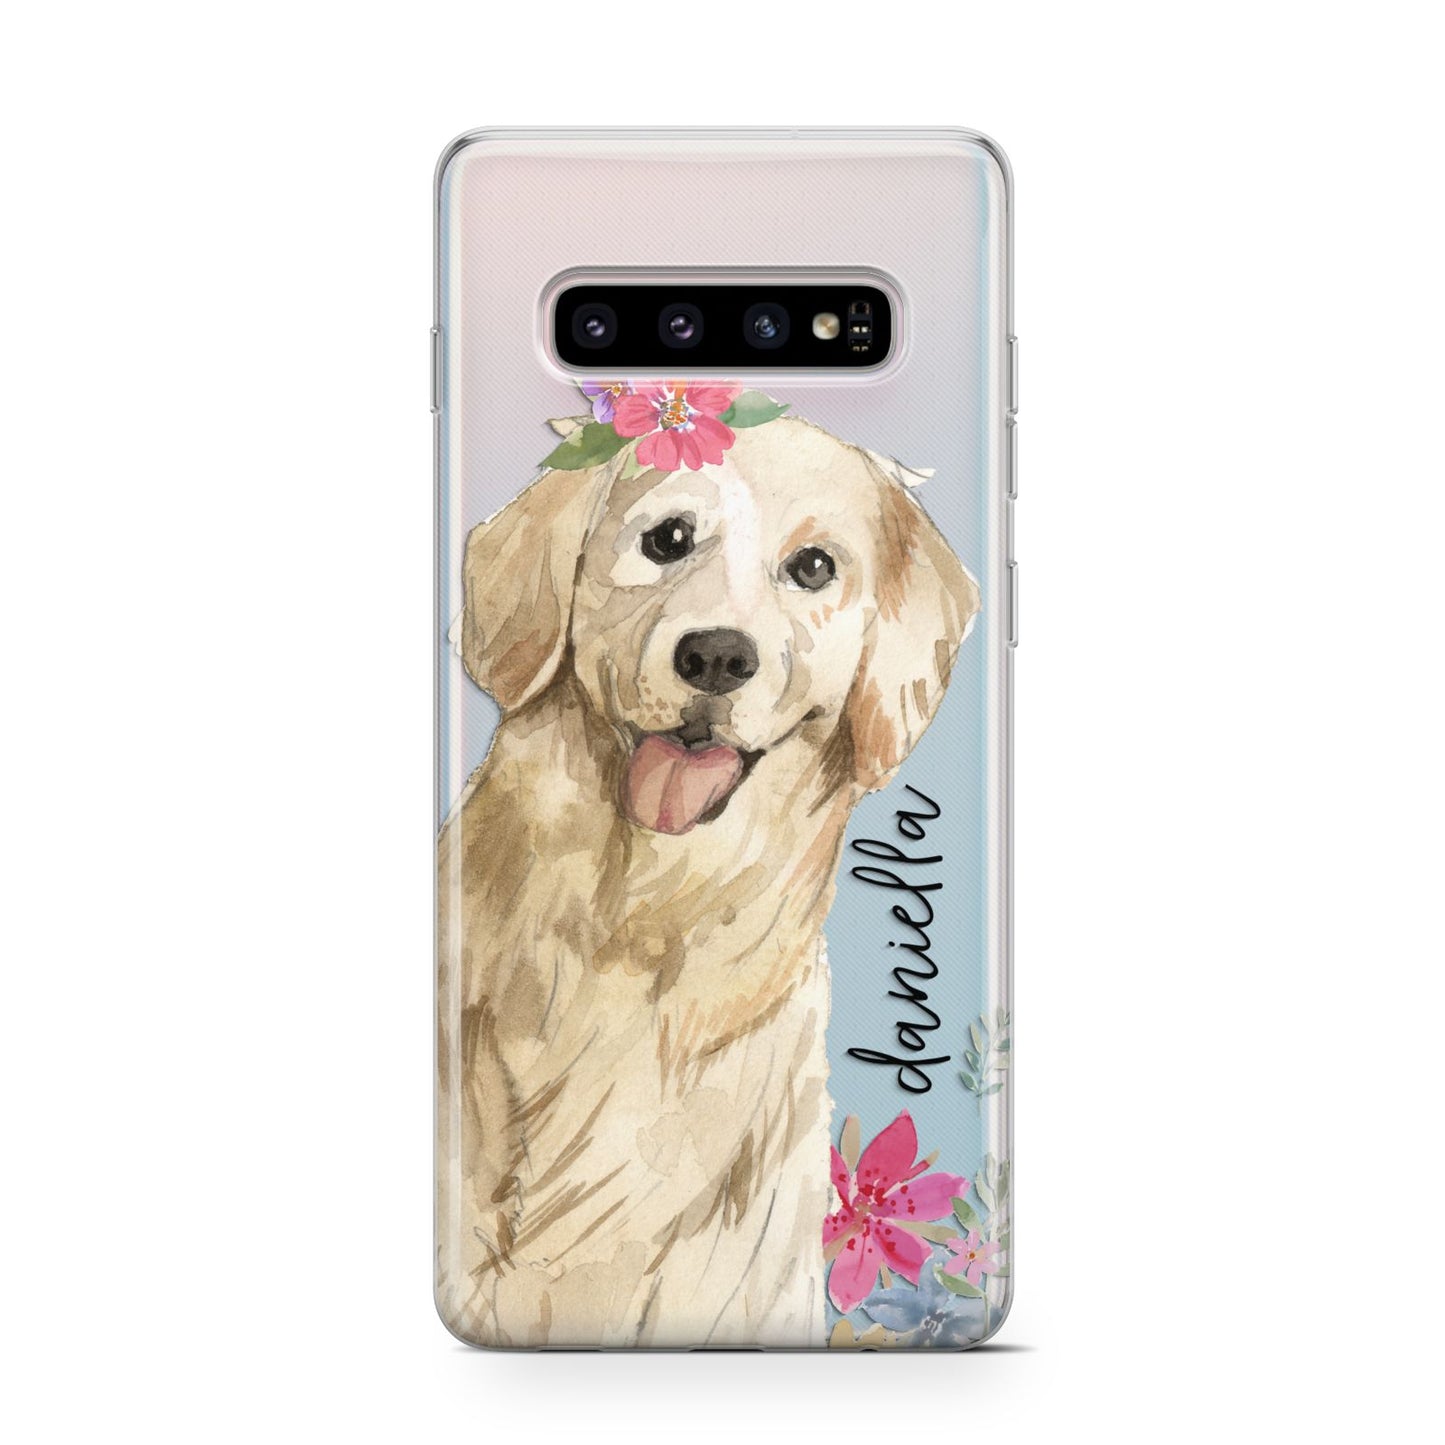 Personalised Golden Retriever Dog Samsung Galaxy S10 Case